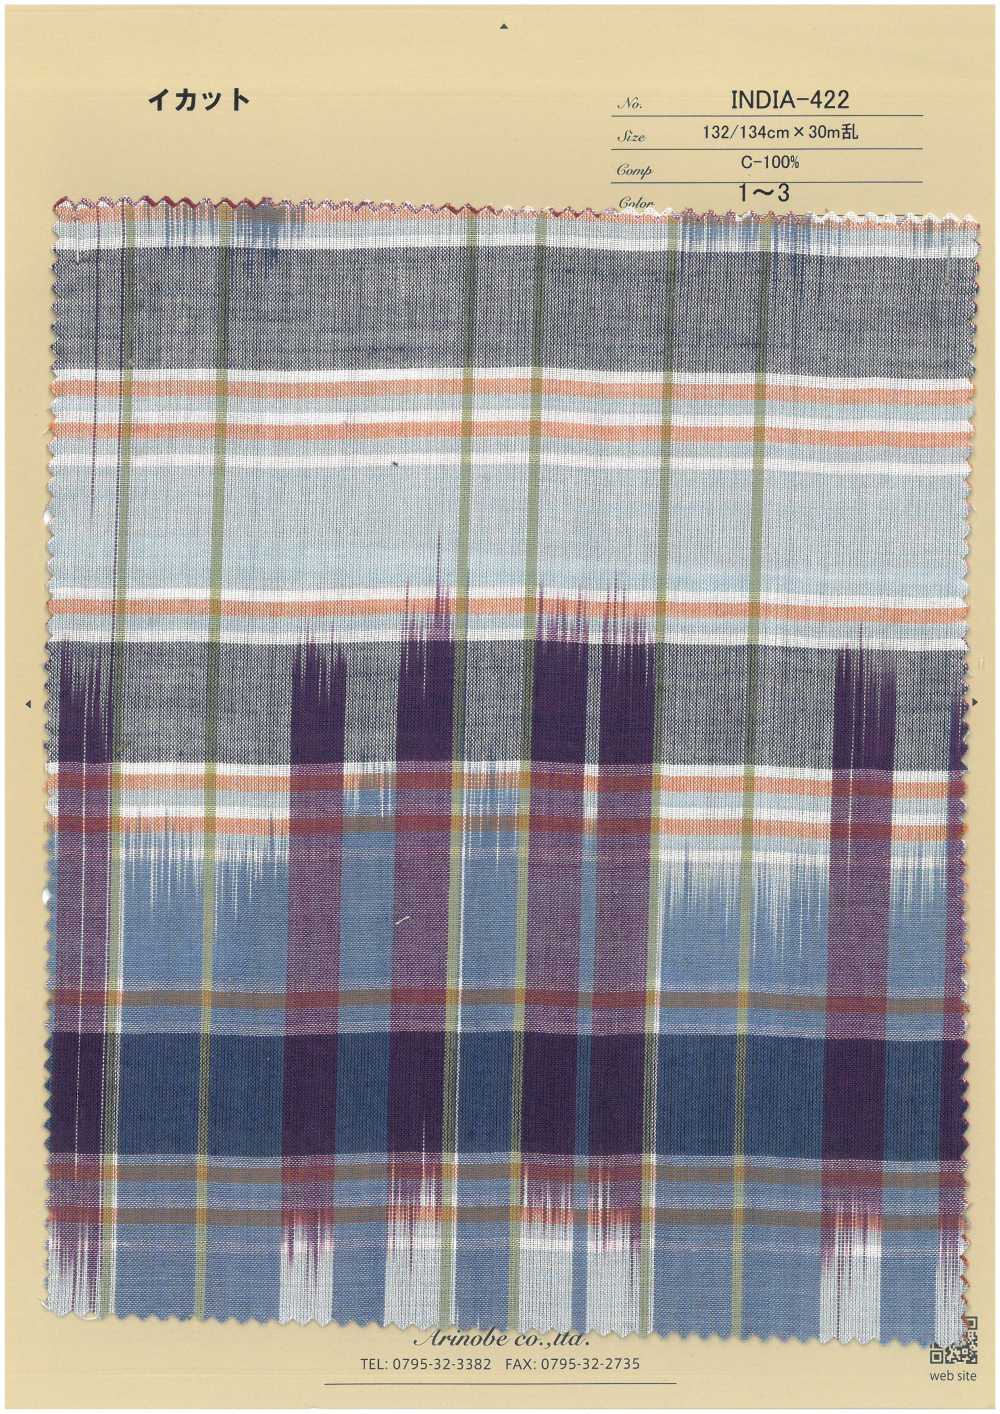 INDIA-422 Ikat[Textilgewebe] ARINOBE CO., LTD.